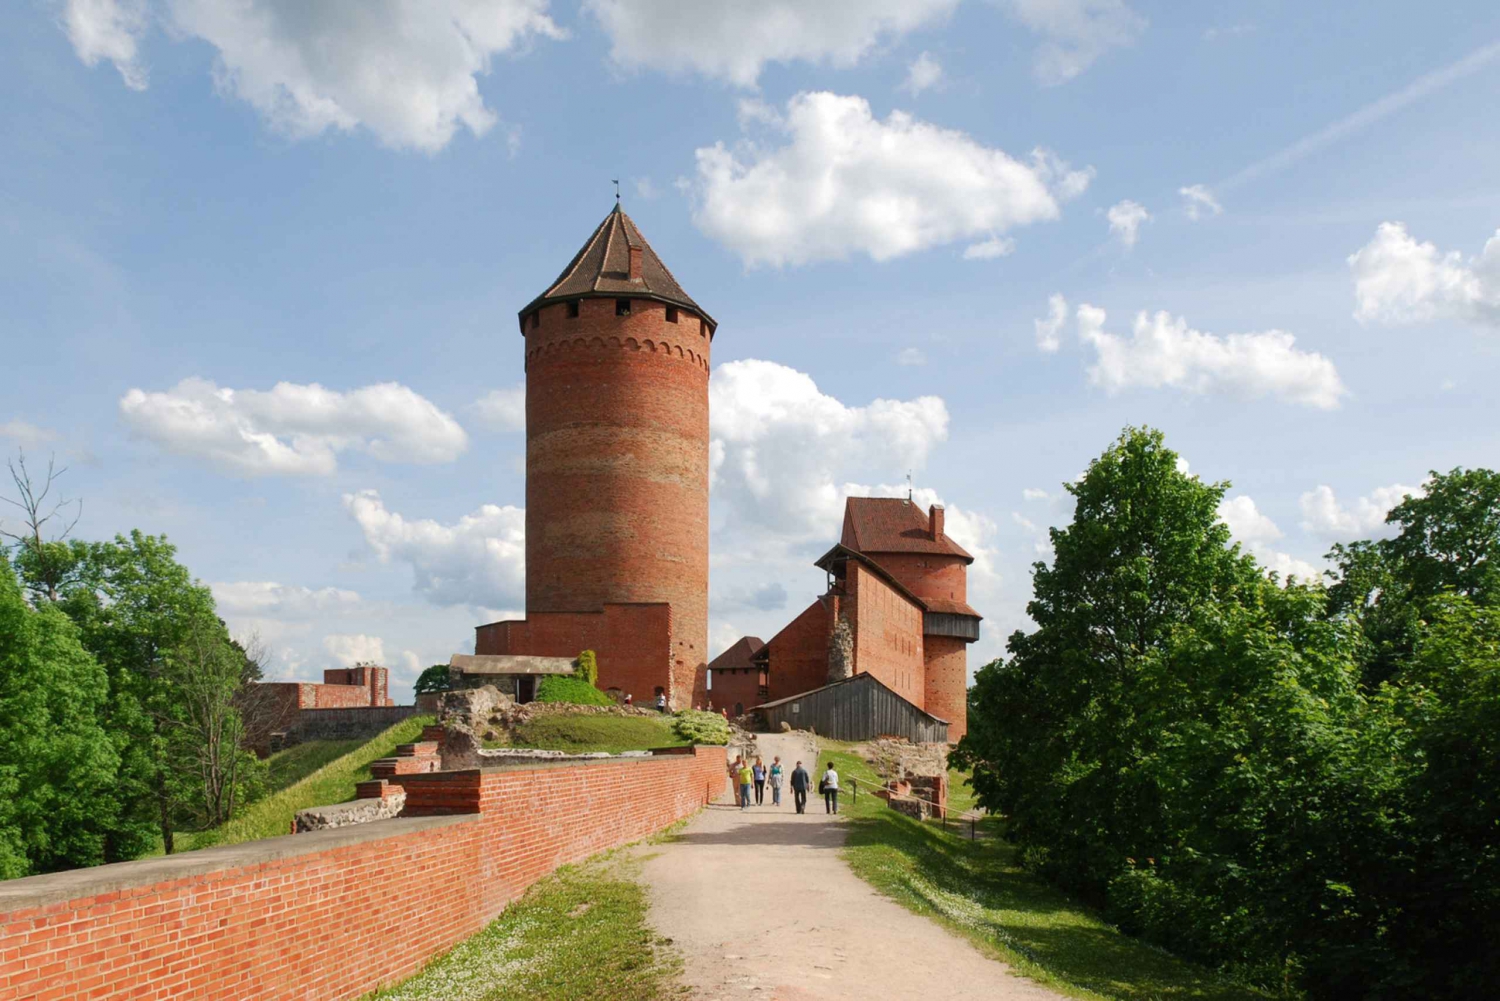 Sigulda Castles, Gauja National Park: Full-Day Tour